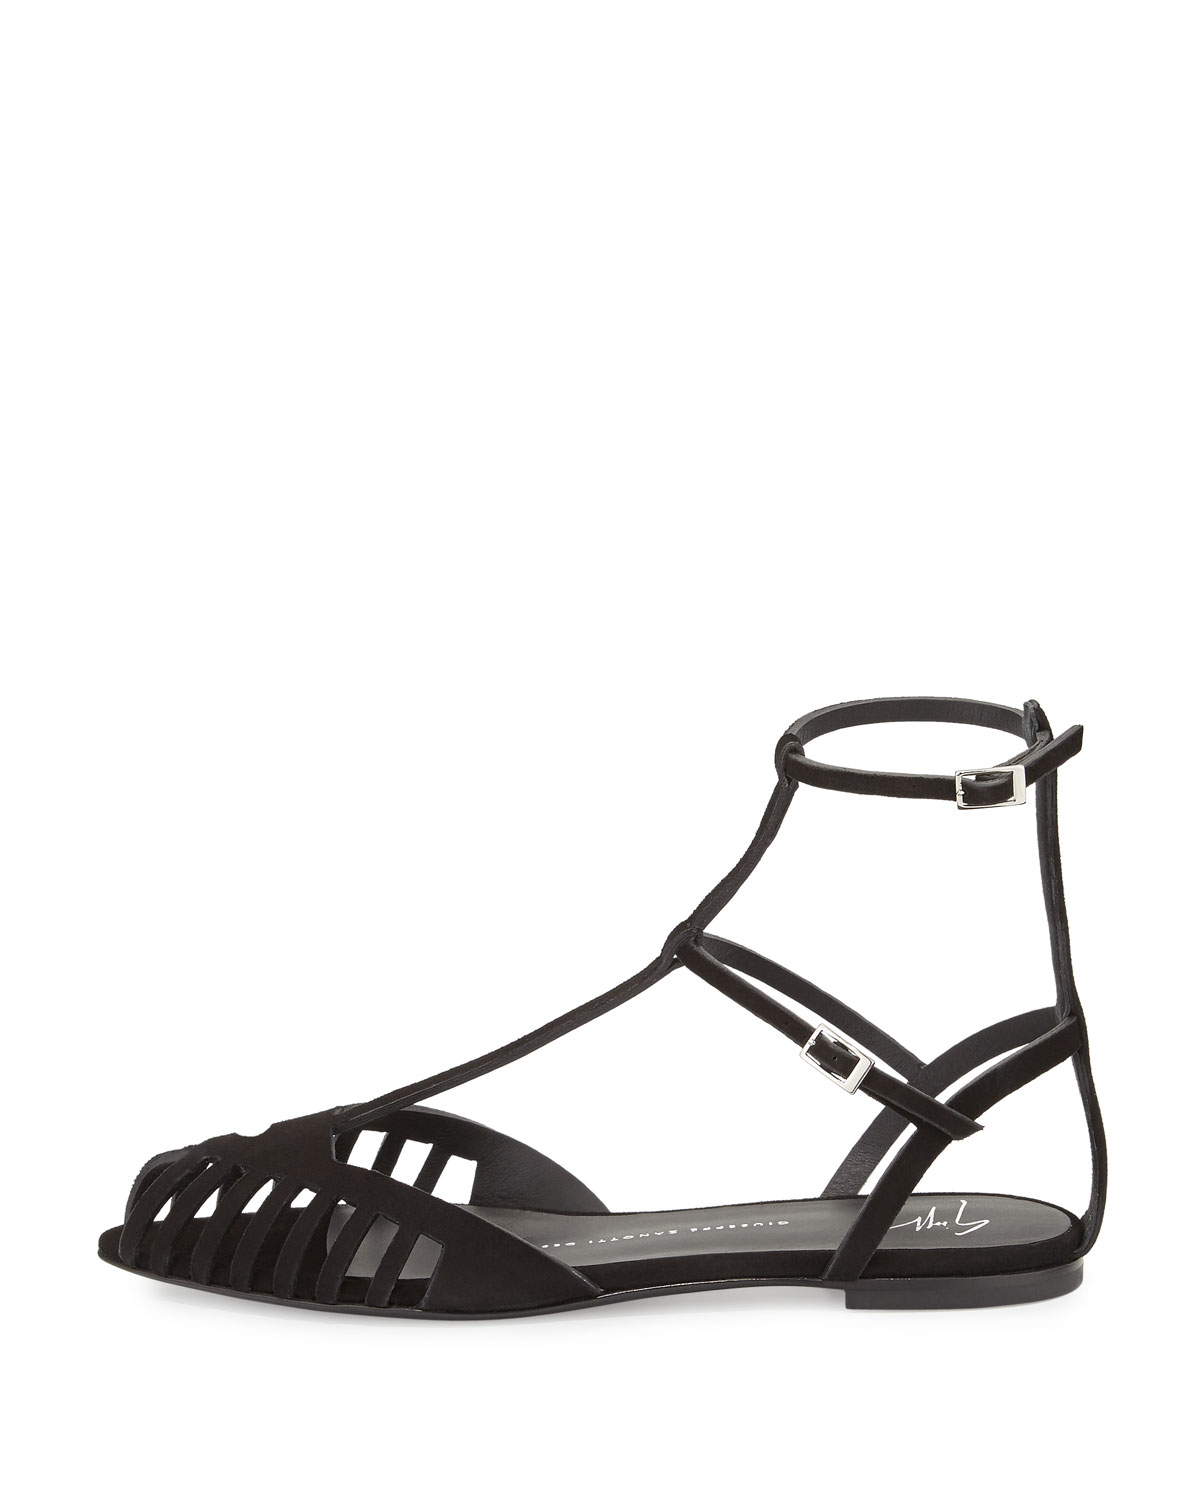 Black Caged Sandals Flat Online Sale, UP TO 55% OFF